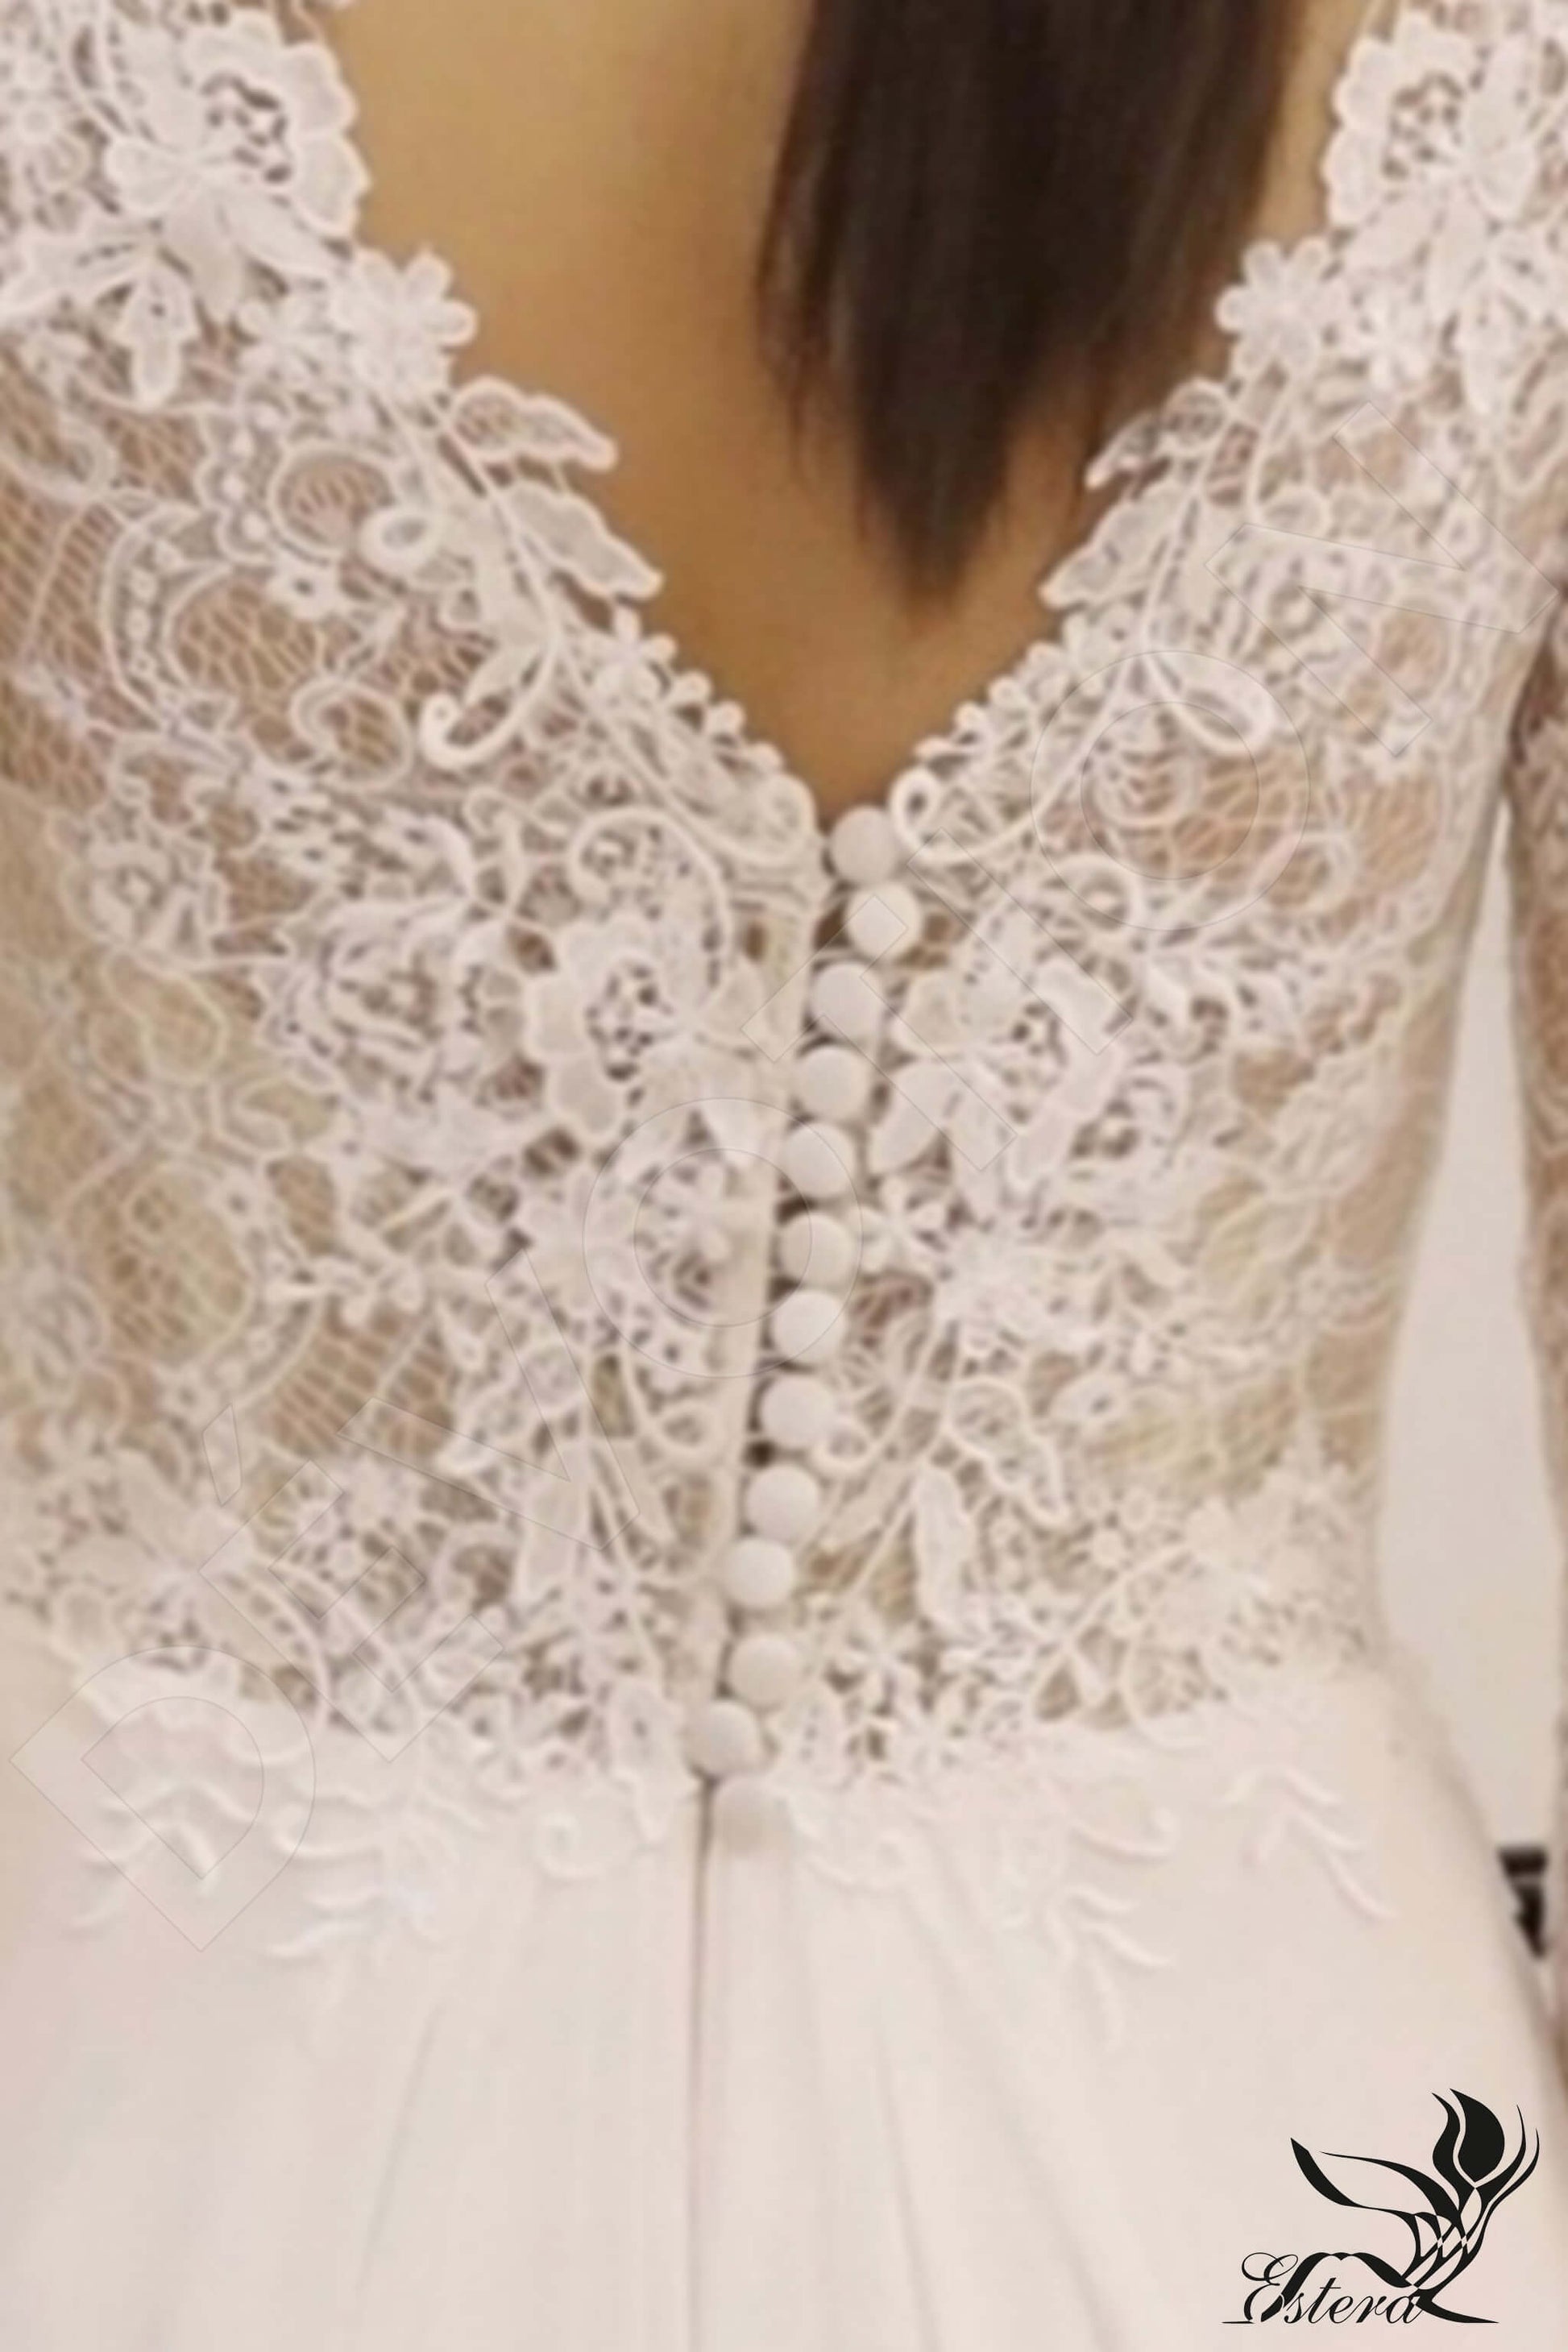 Asma A-line Scoop Ivory Wedding dress